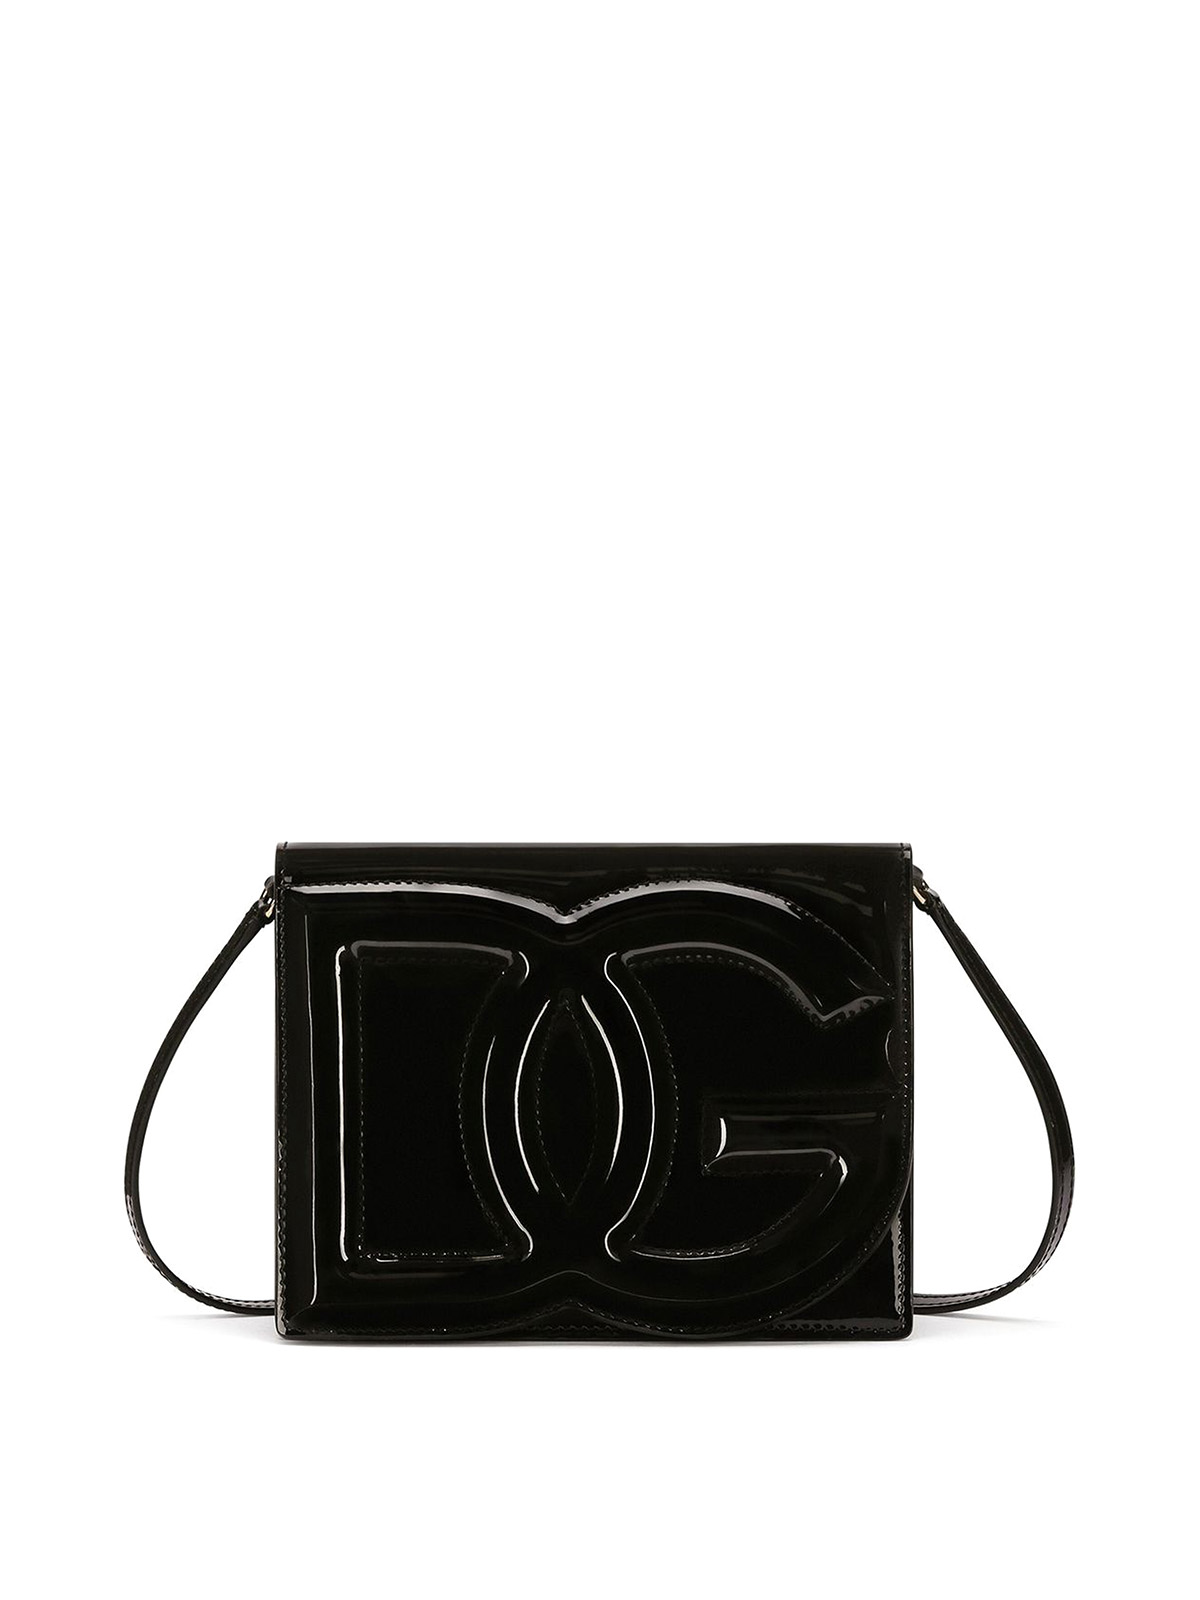 Dolce & Gabbana Dg Logo Patent Leather Crossbody Bag In Black